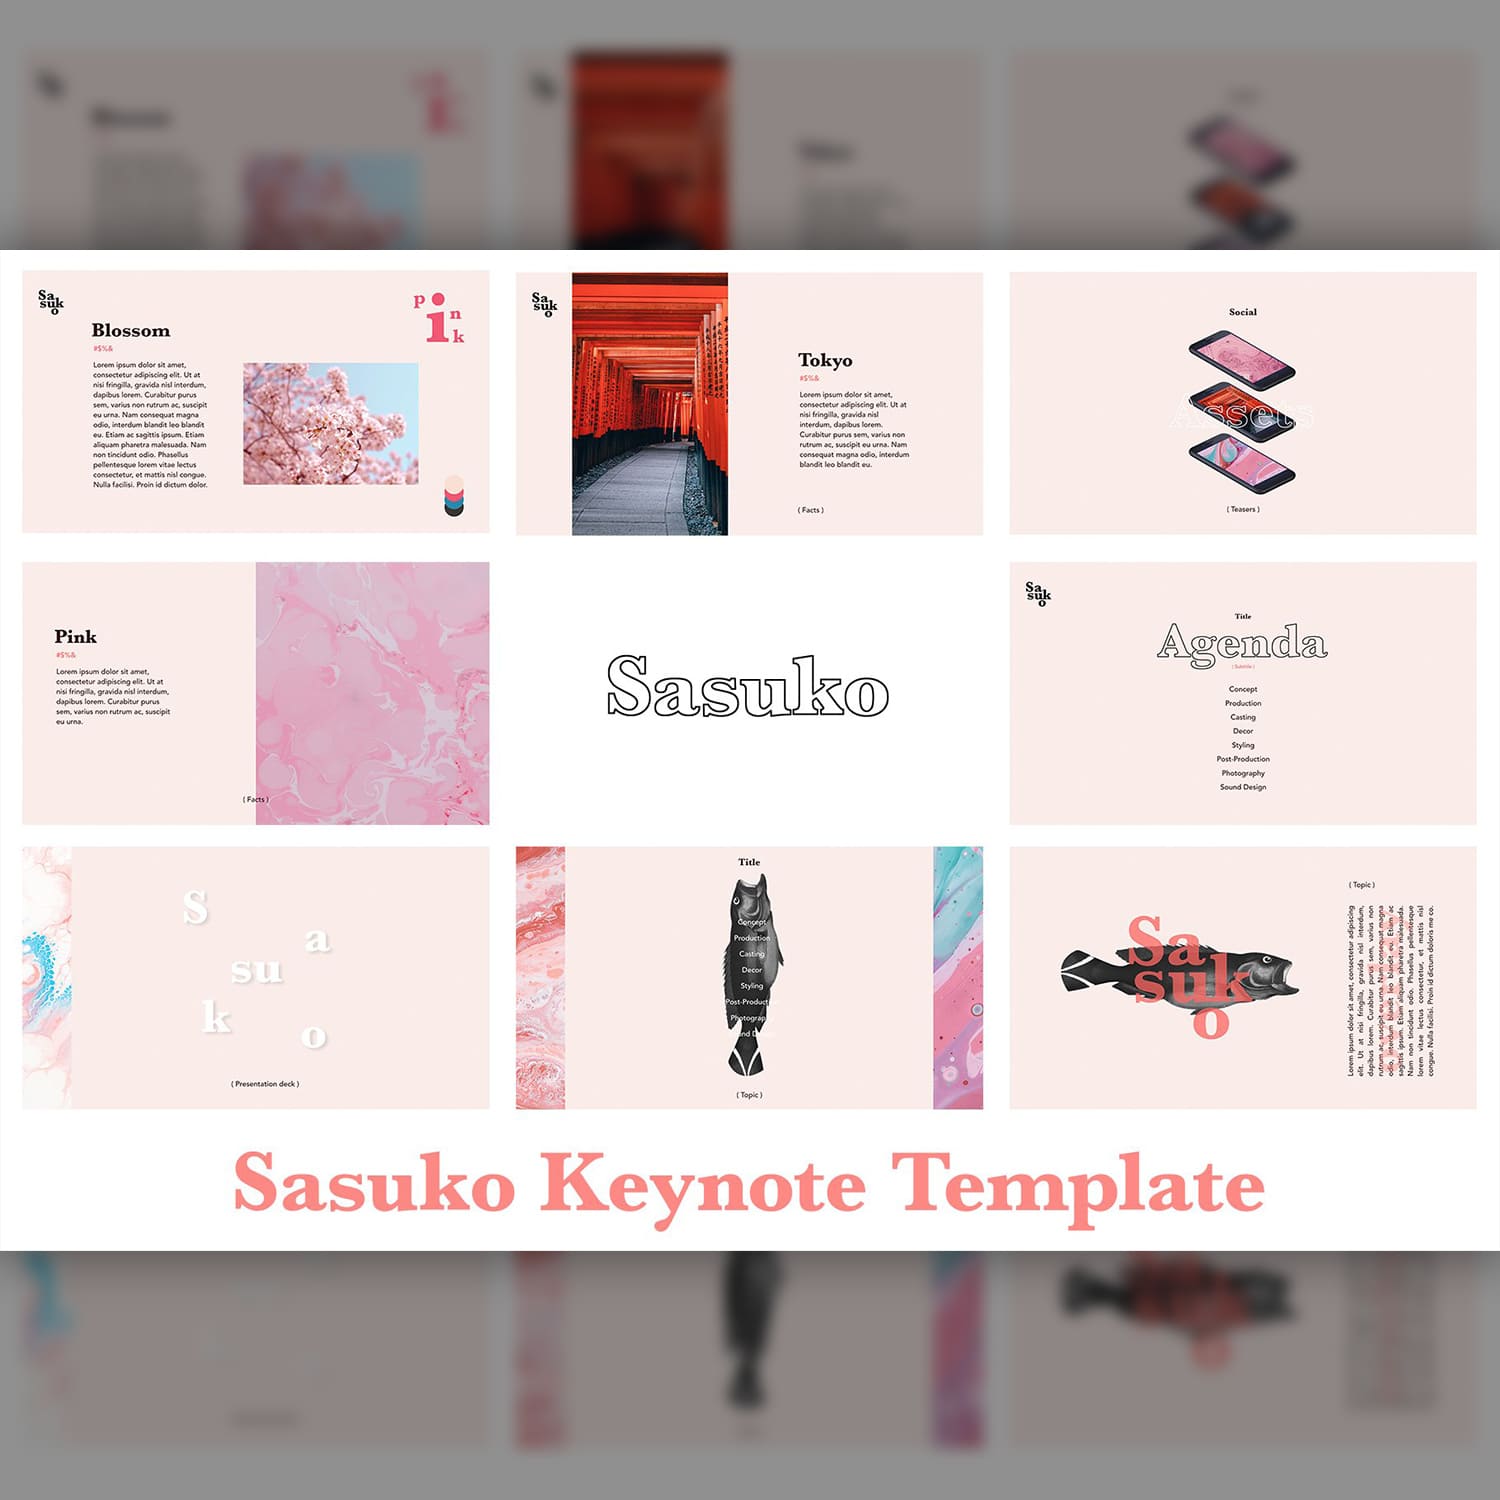 Sasuko Keynote Template cover.